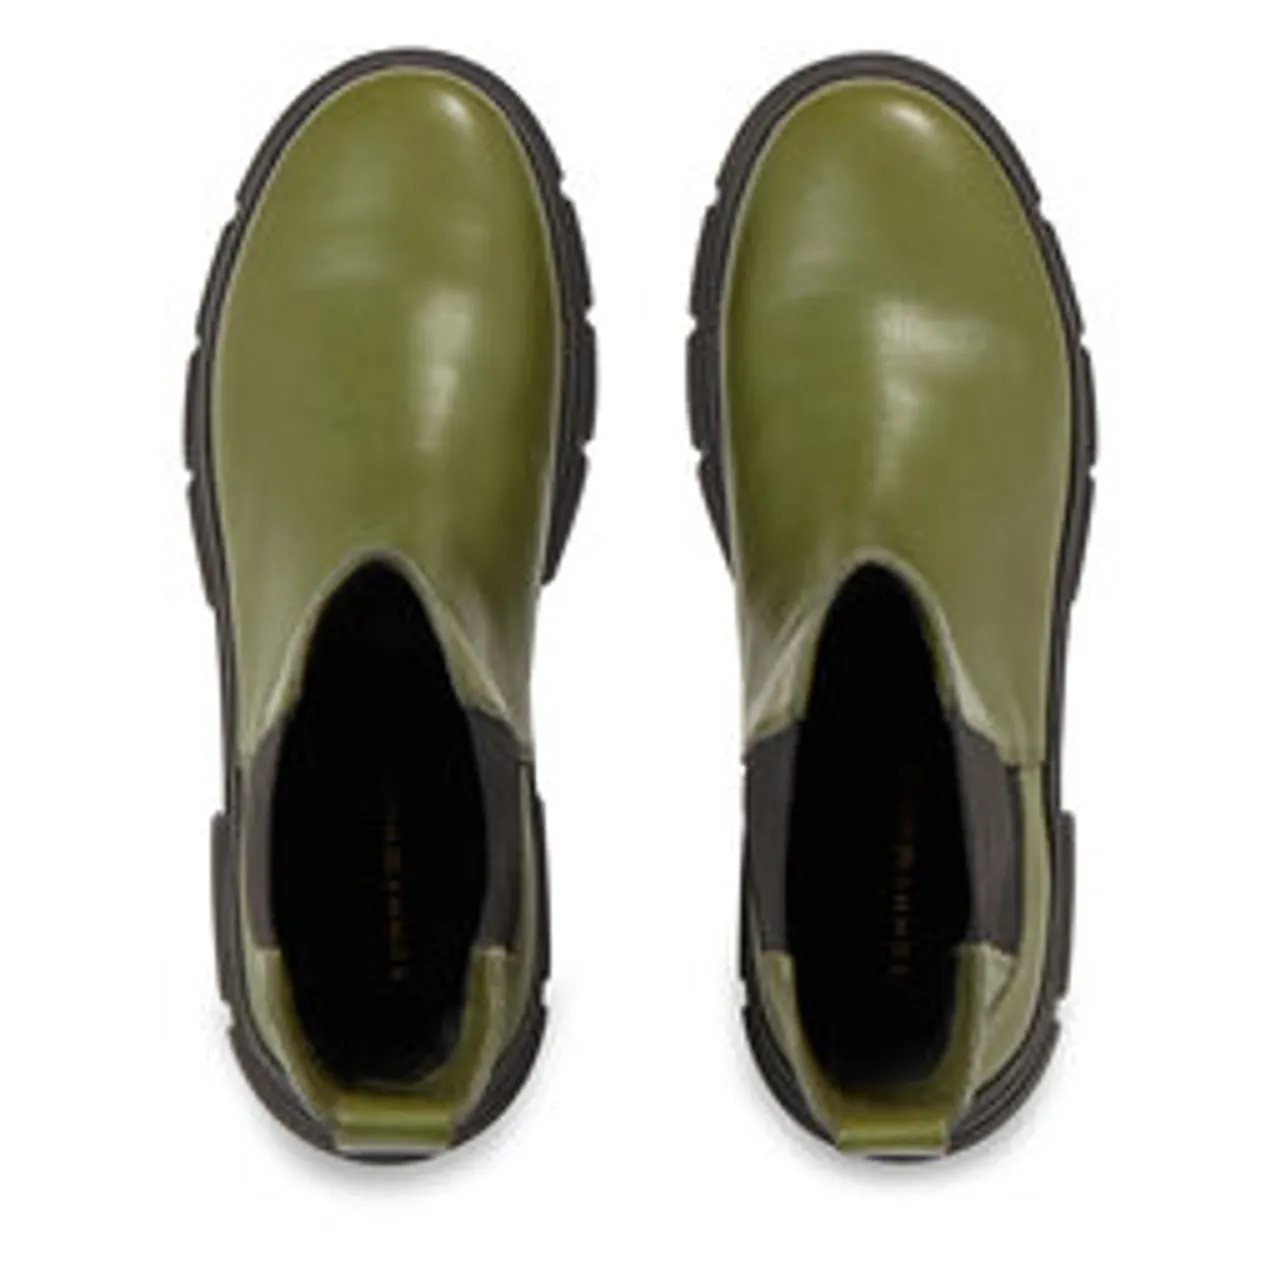 Klassische Stiefeletten Tommy Hilfiger Essential Leather Chelsea Boot FW0FW07490 Putting Green MS2